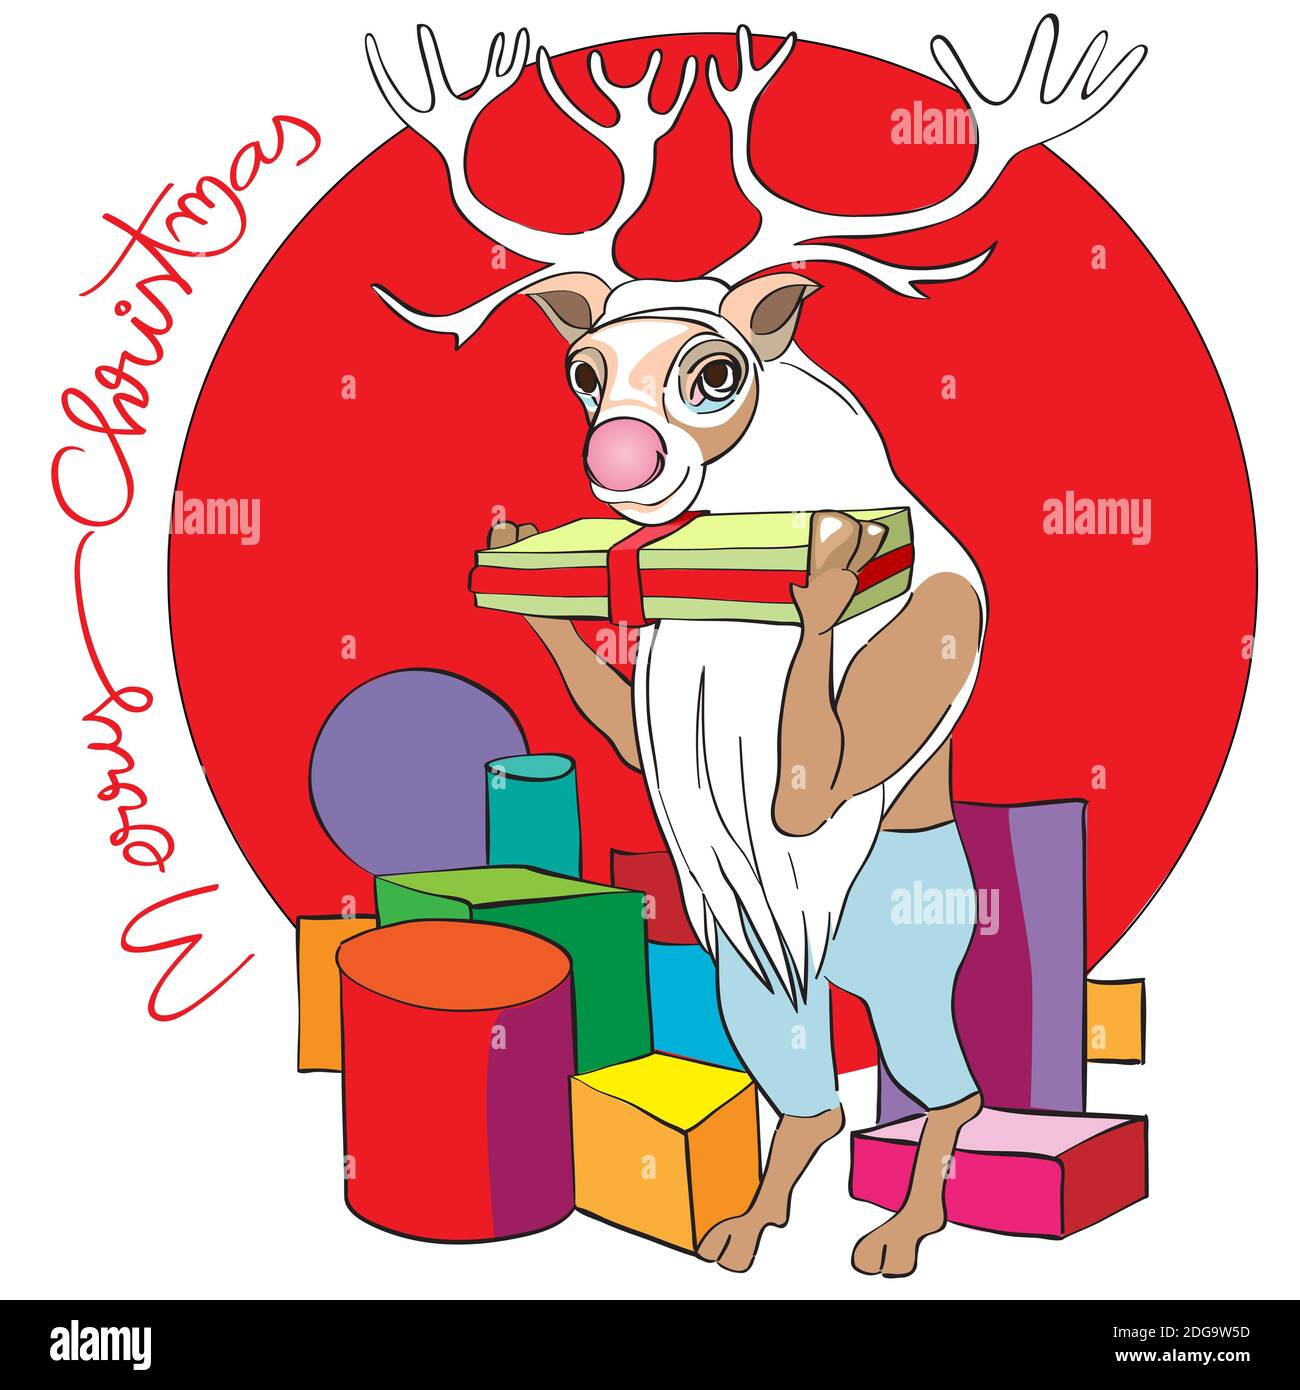 Reindeer with presents Stock Photo